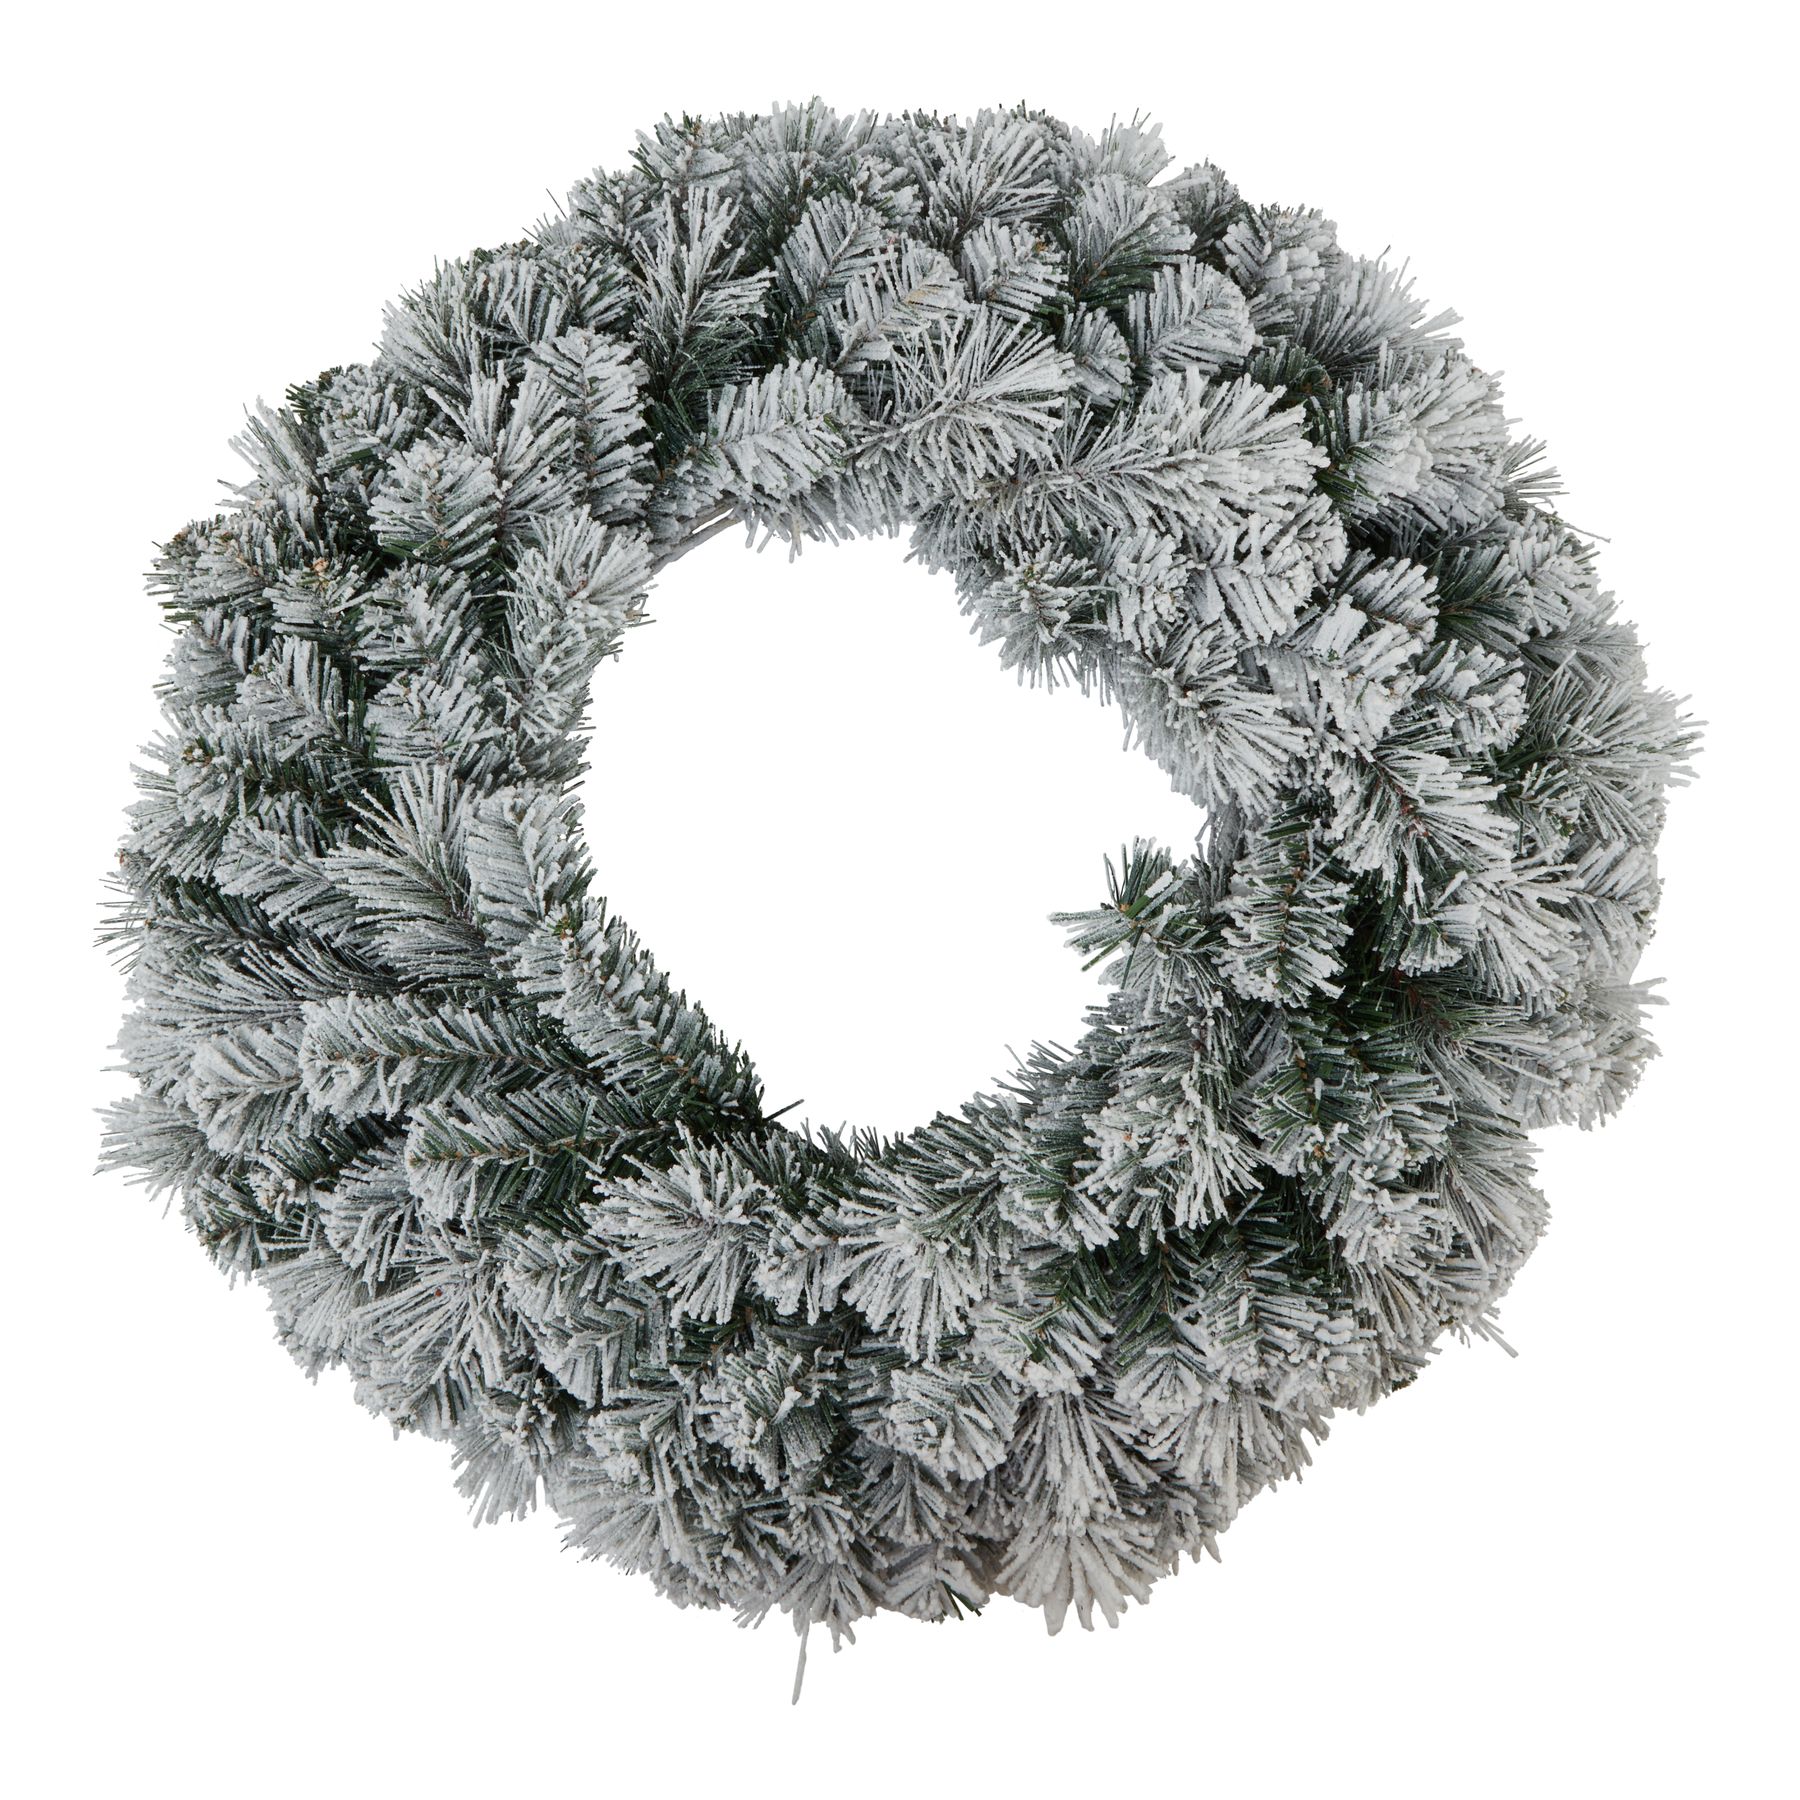 Snowy Pine Wreath - Image 1